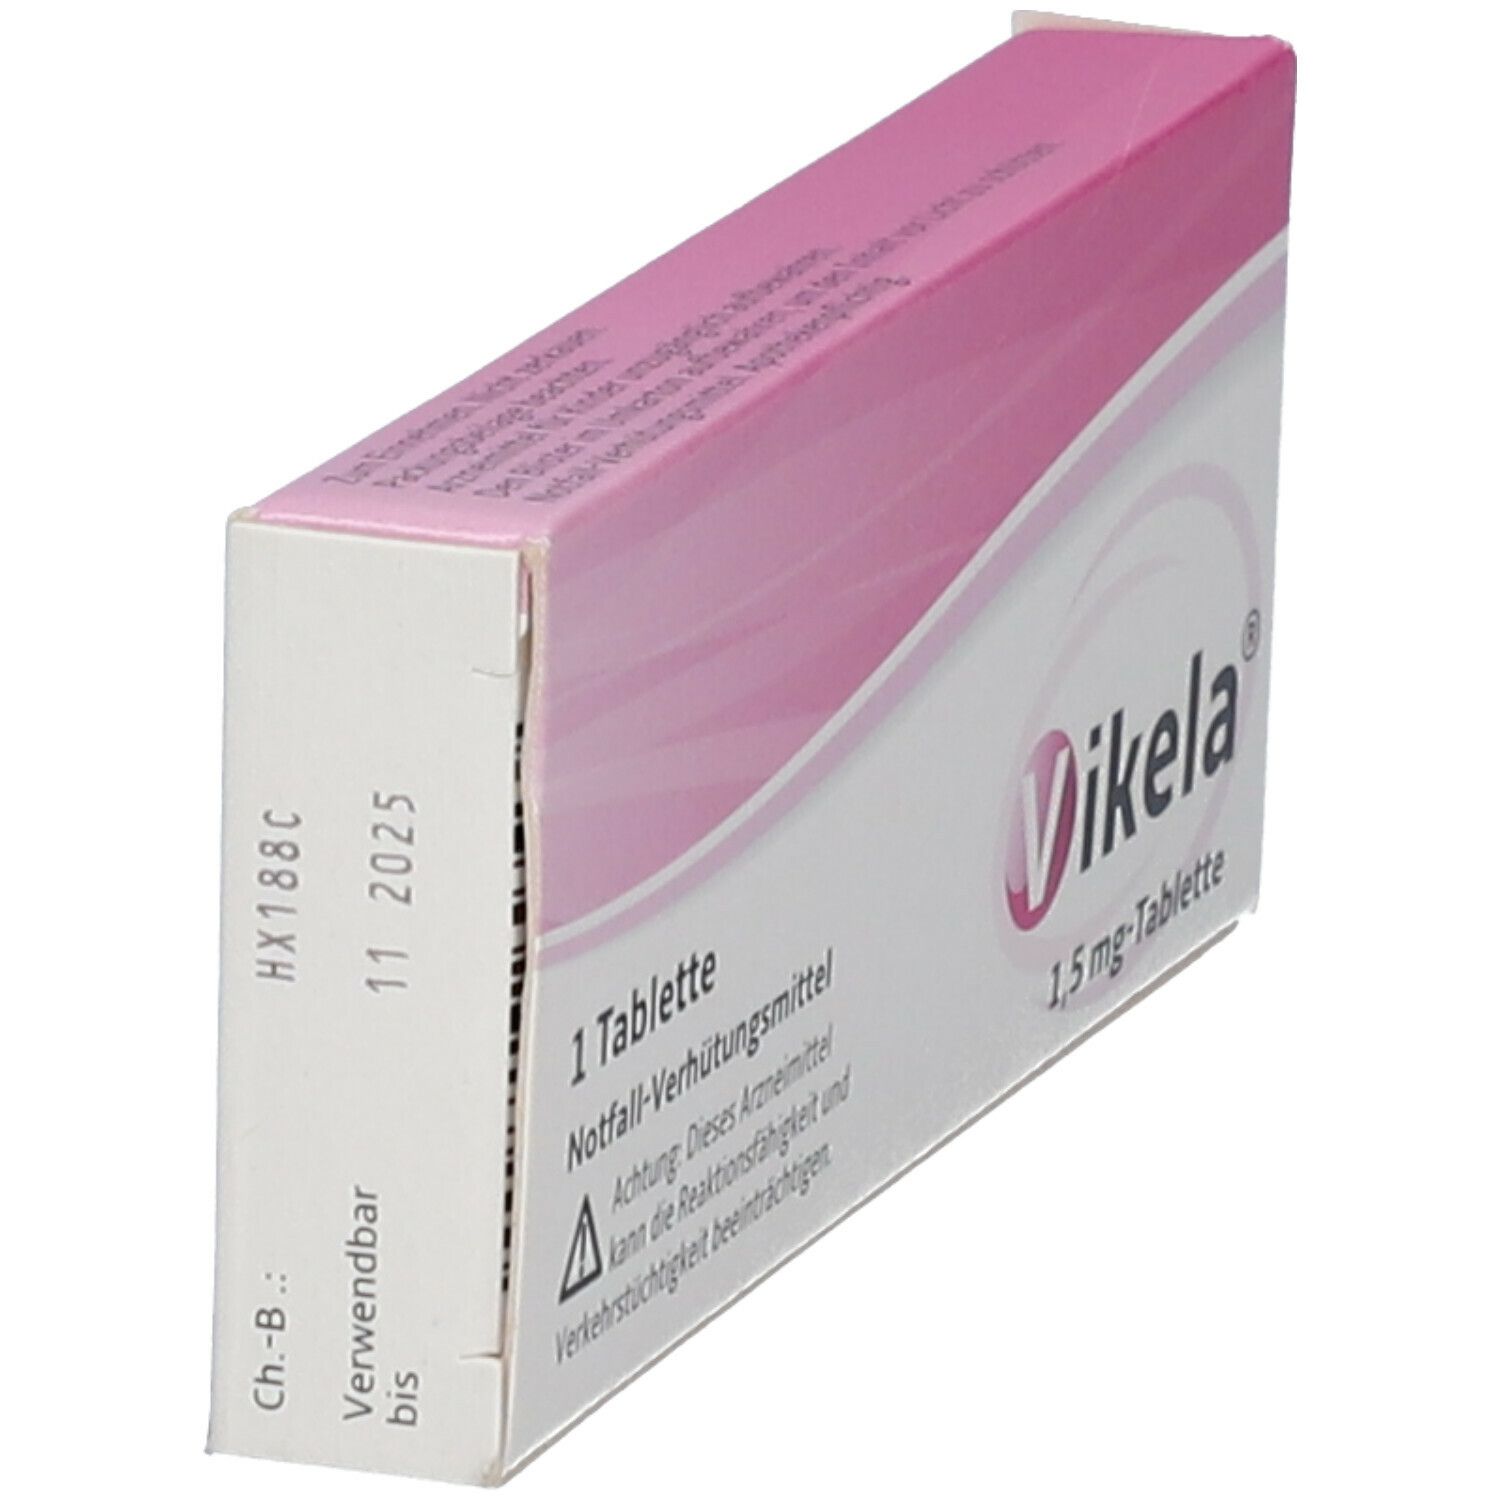 Vikela® 1,5 mg Notfallverhütung